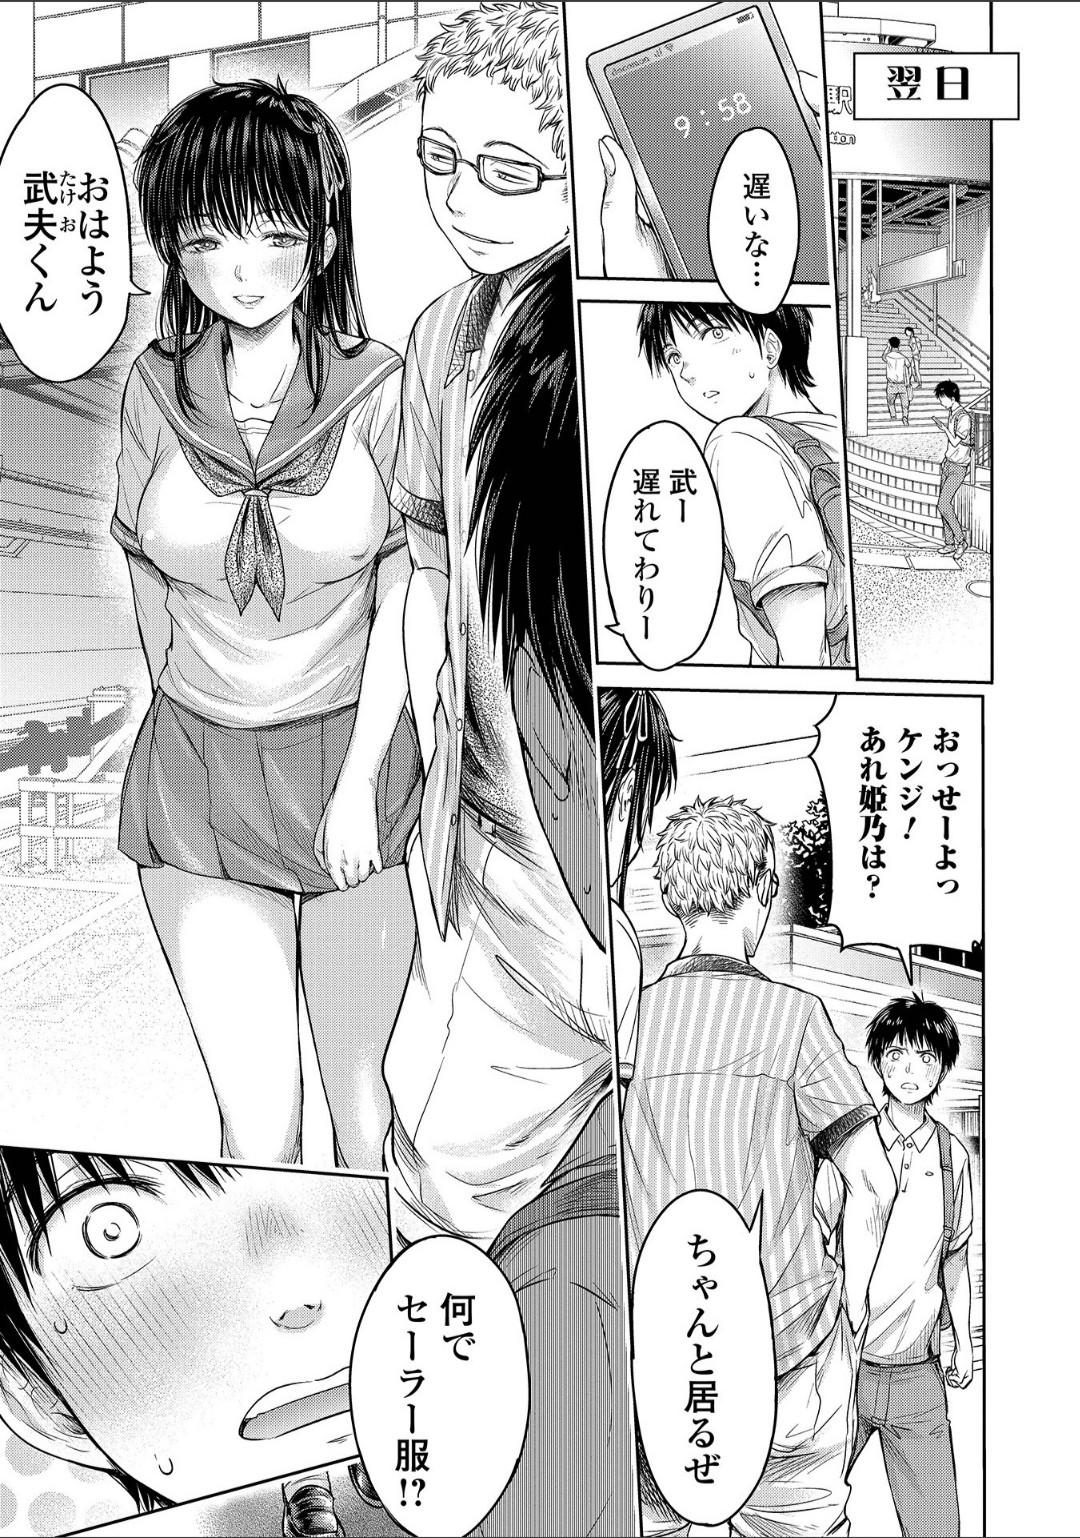 Sexcams 彼女に告白する前に友達に中出しされた... 5 Anime - Page 9